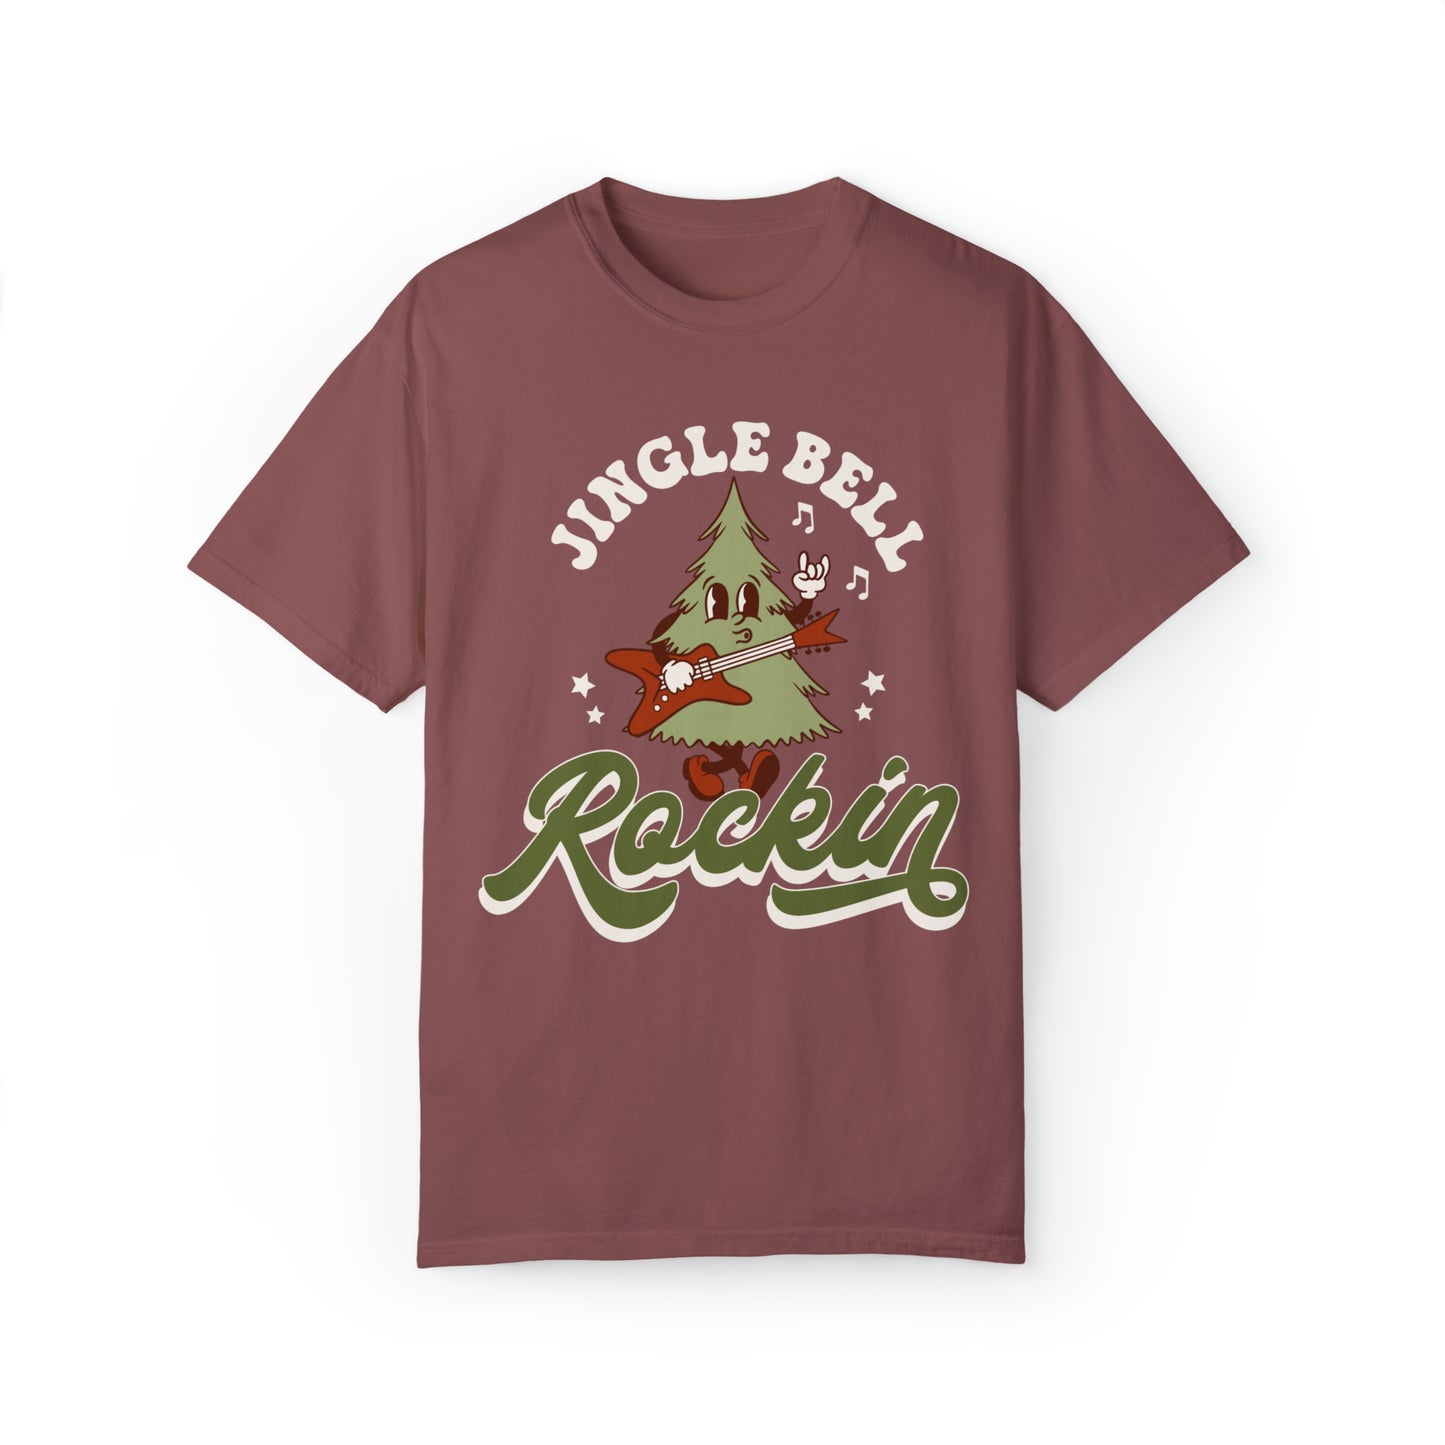 Jingle Bell Rockin' Tree Shirt